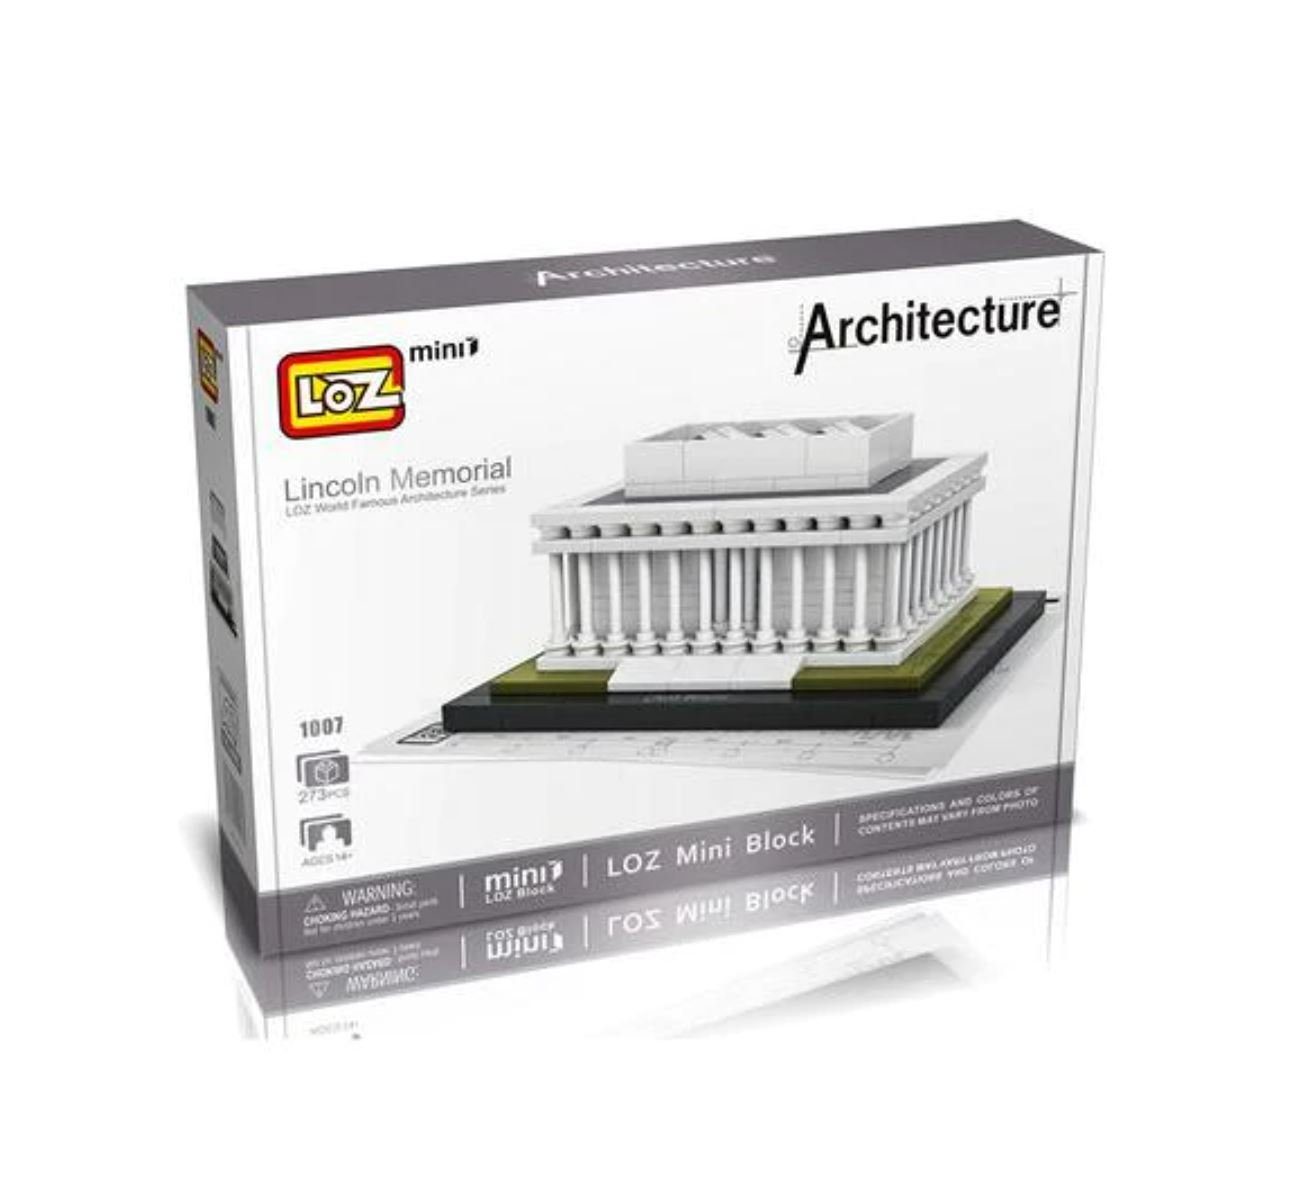 Konstruktions-Spielset LOZ 1007 Lincoln Memorial Mini Blocks Klemmbaustein Set